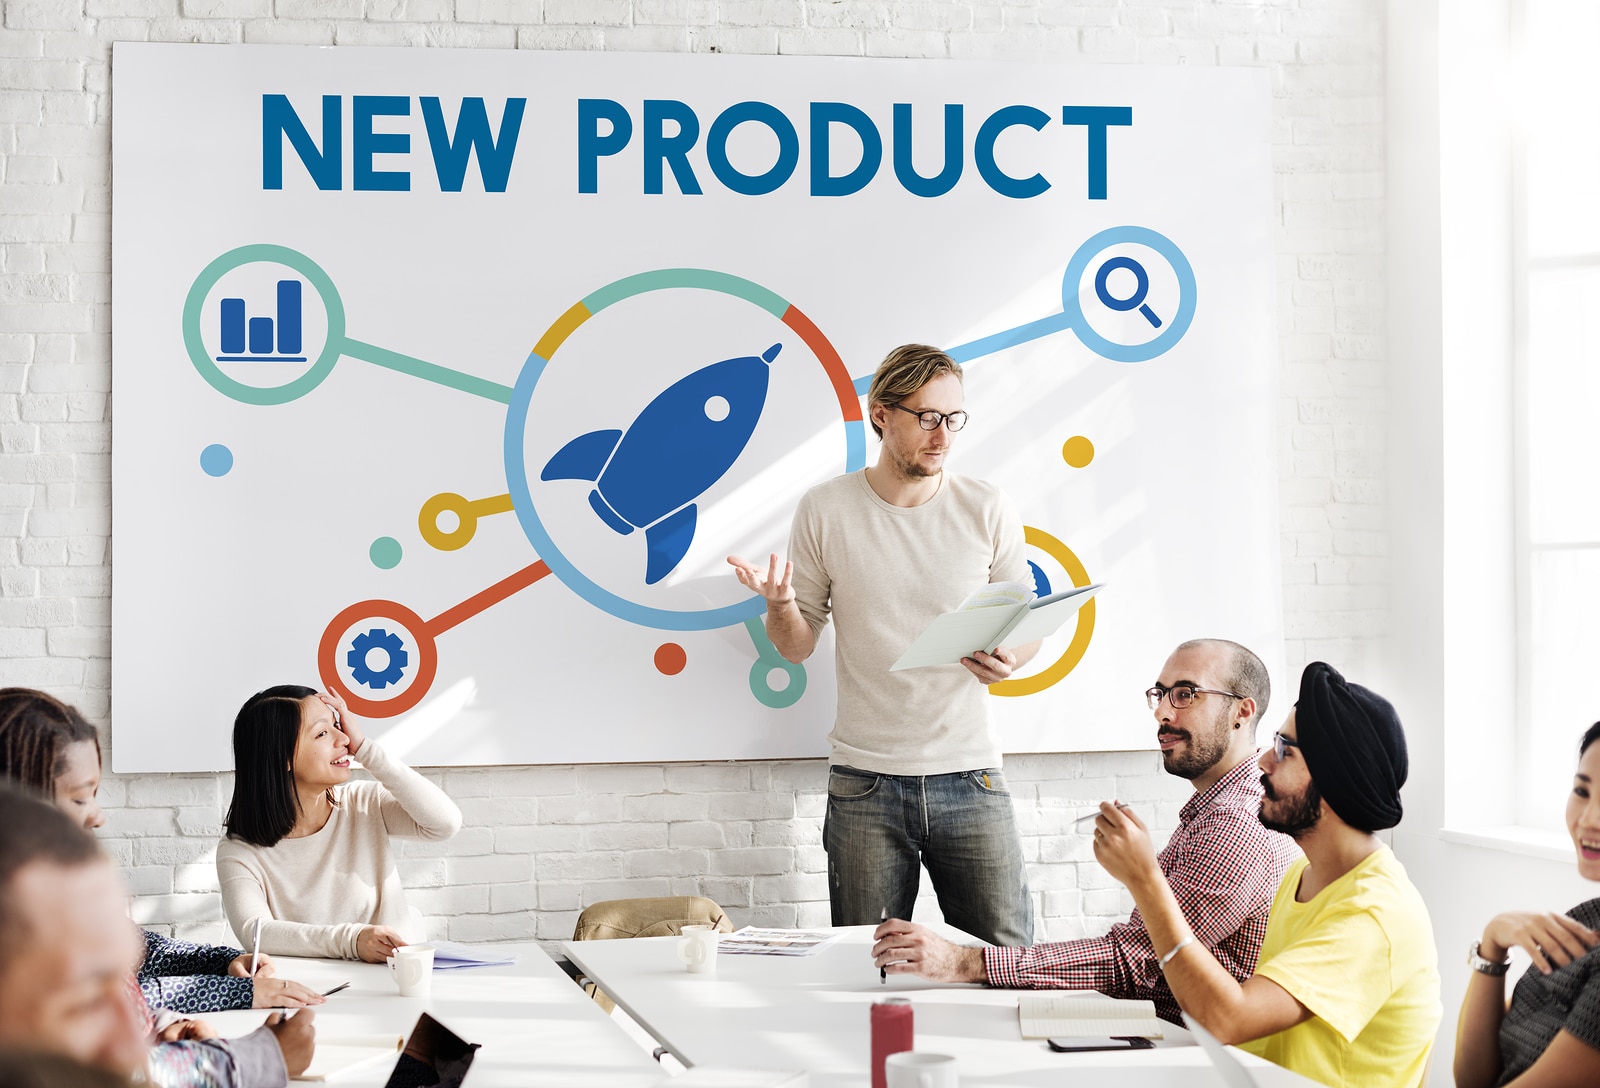 Product launch best practices that capture your target market